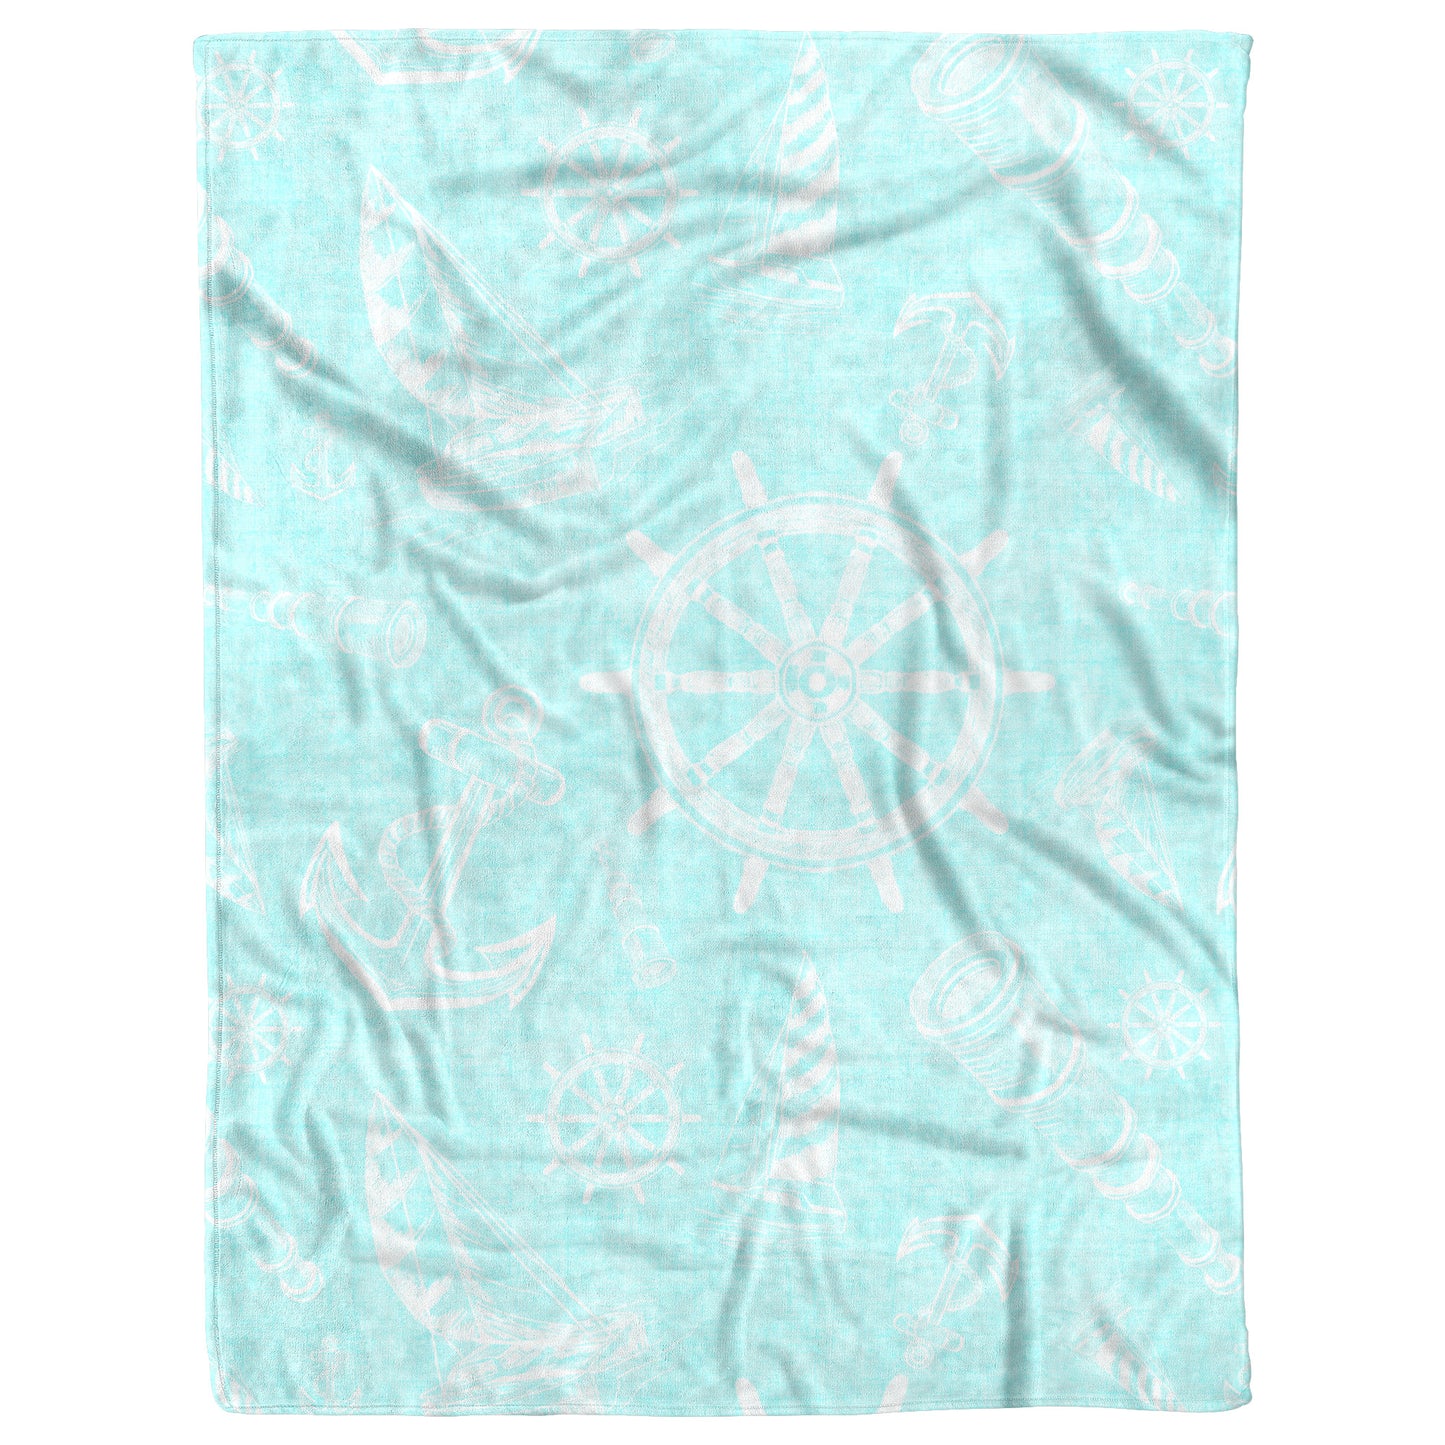 Nautical Sketches on Coastal Blue Linen Texture Background, Fleece Blanket